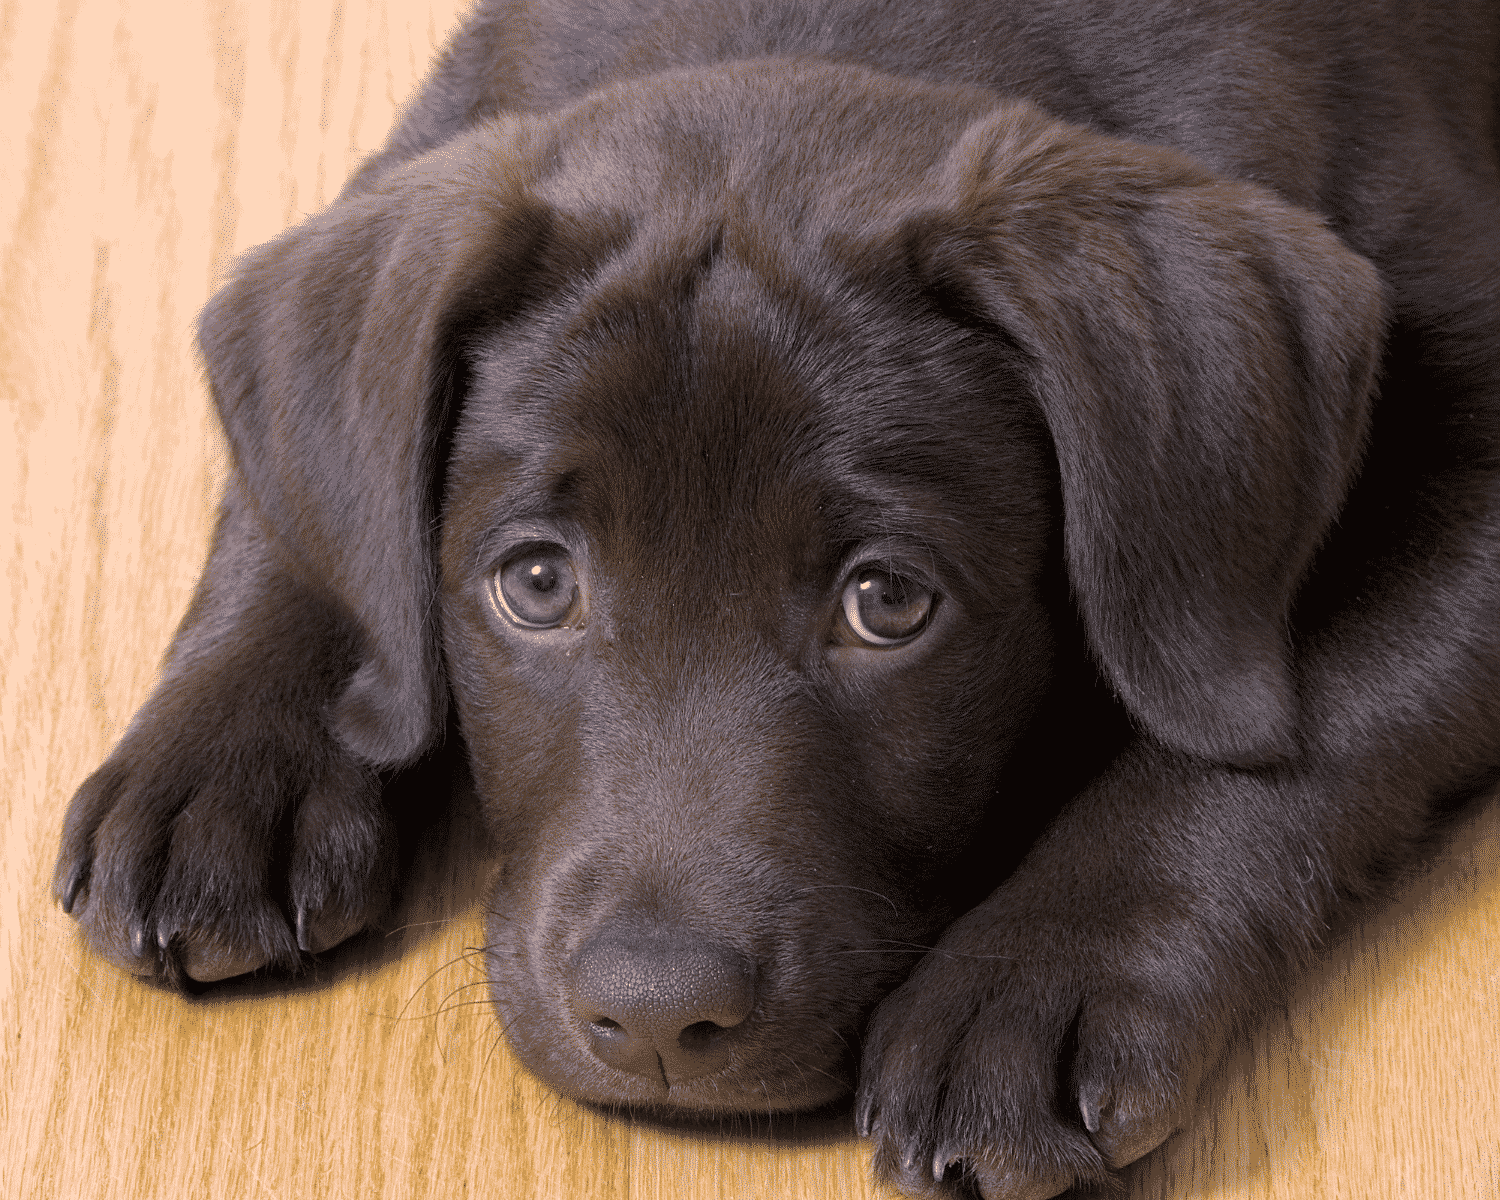 sad puppy dog images